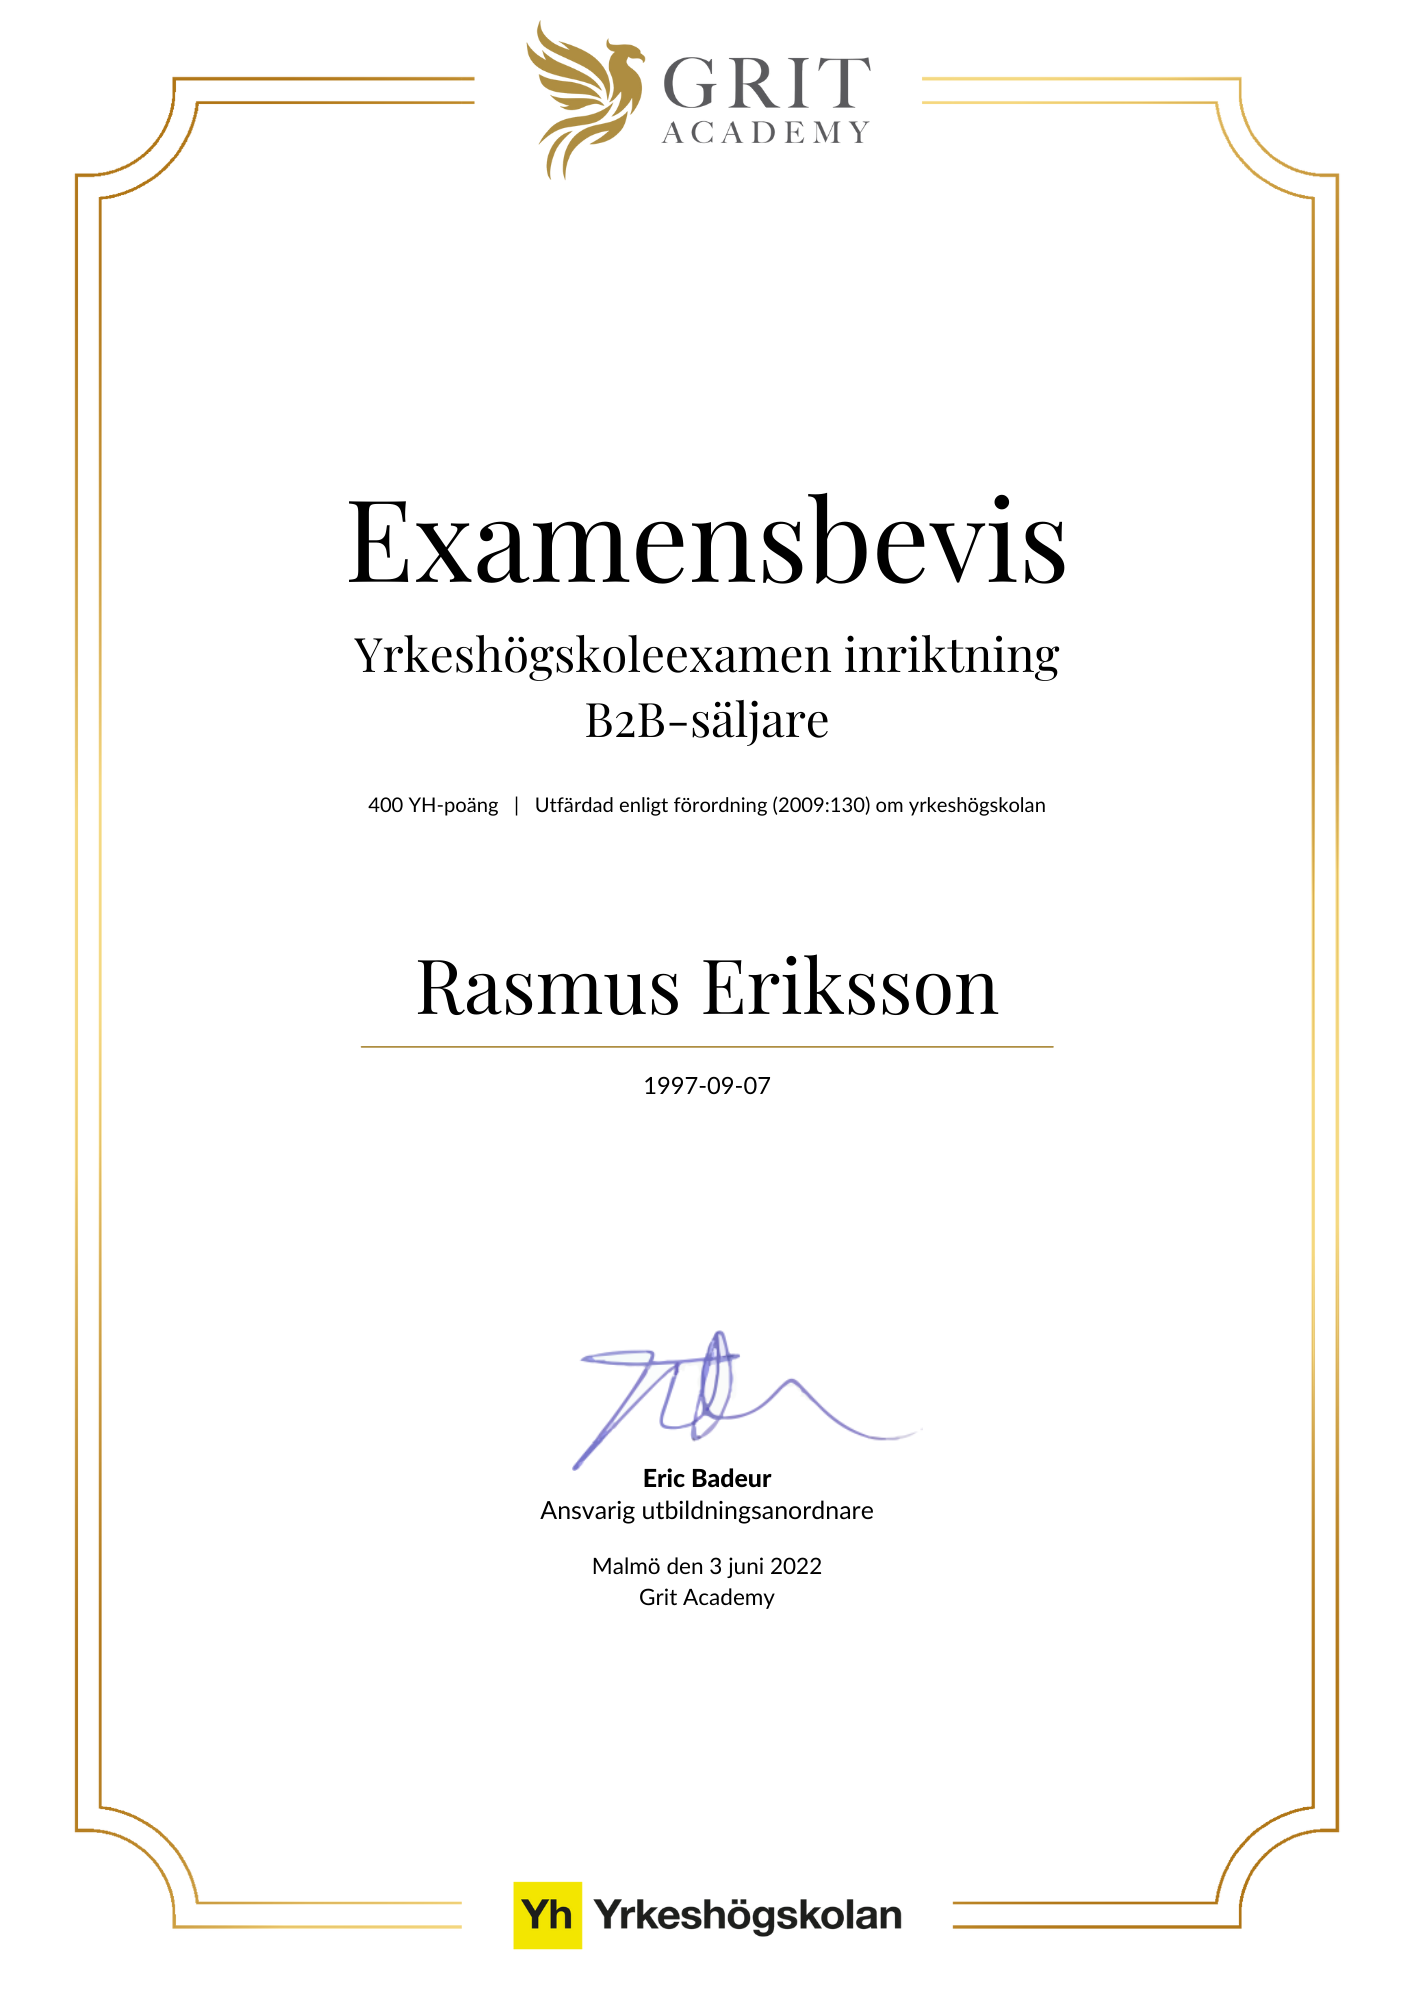 Examensbevis Rasmus Eriksson - 1